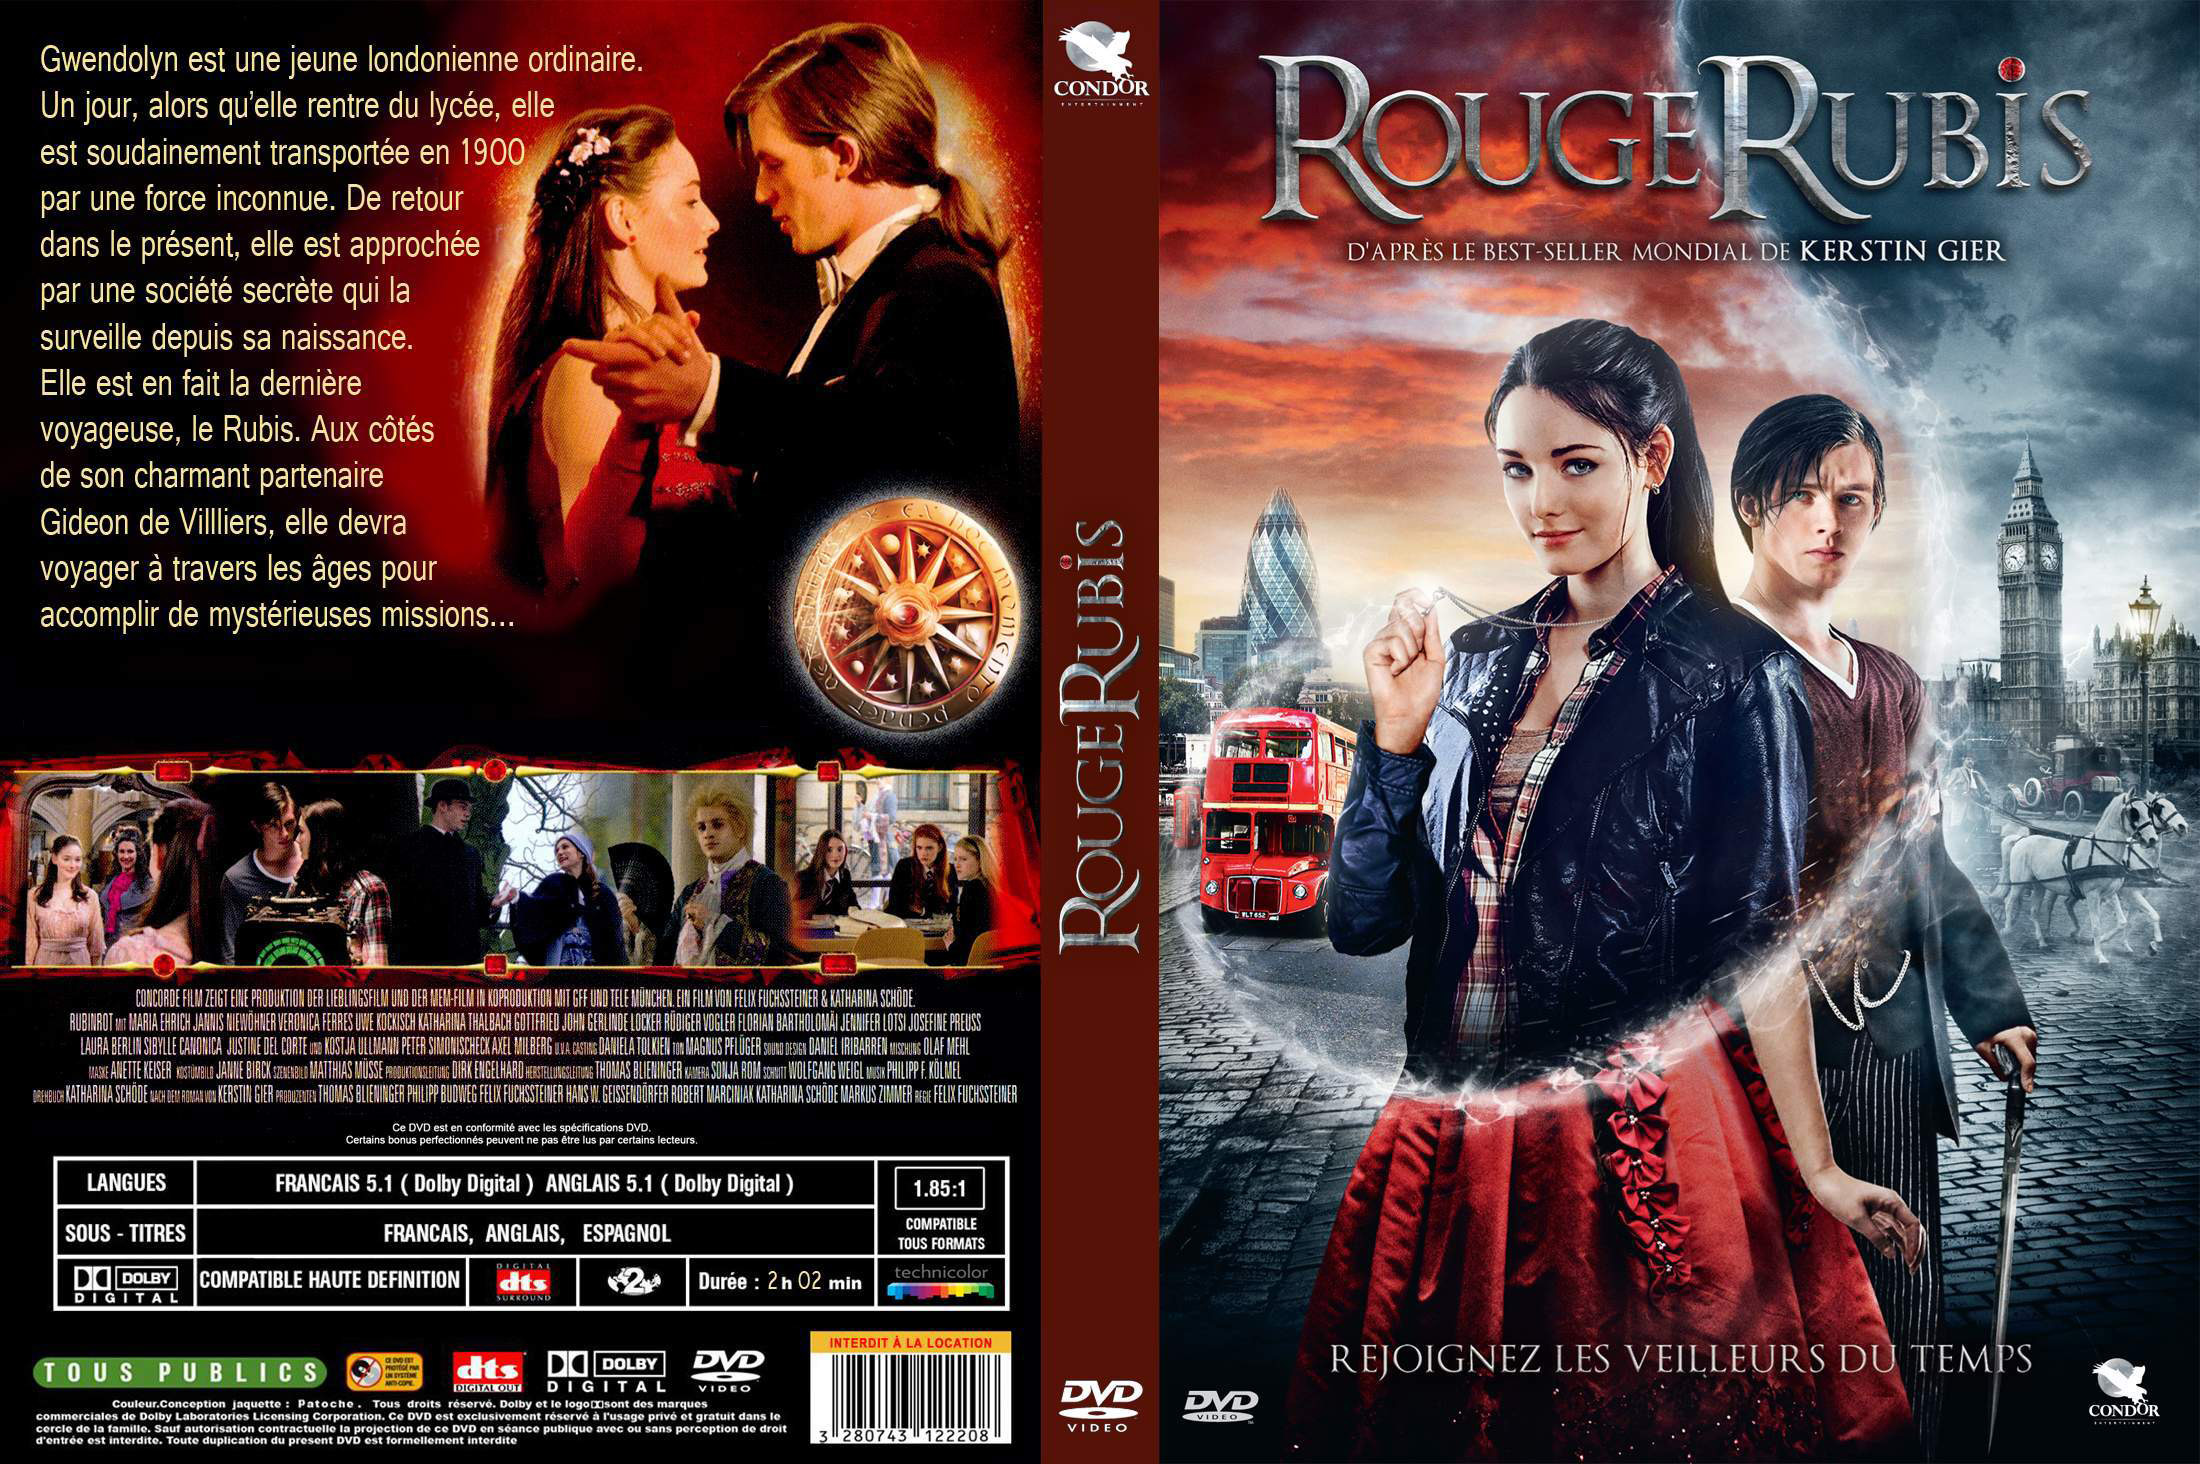 Jaquette DVD Rouge rubis custom